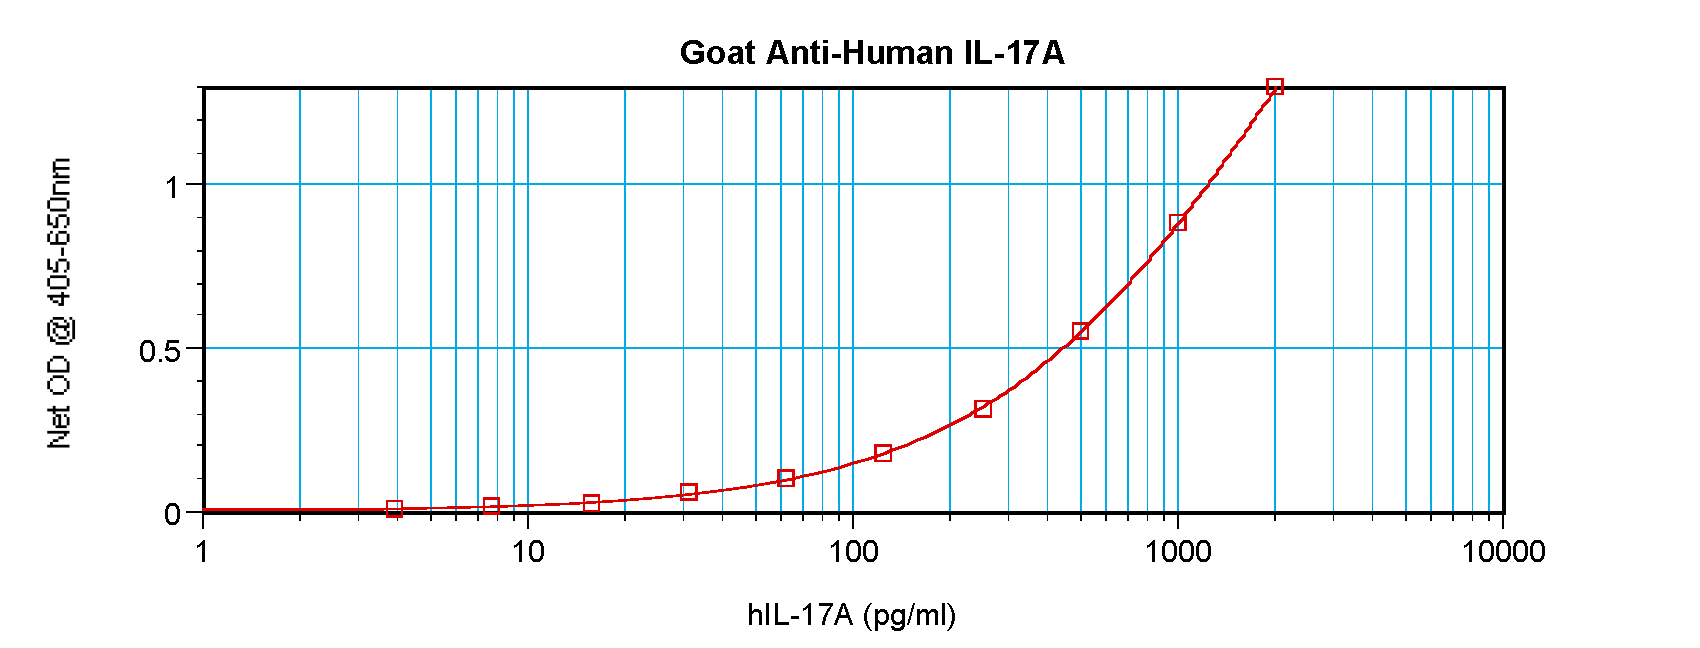 IL17A Antibody